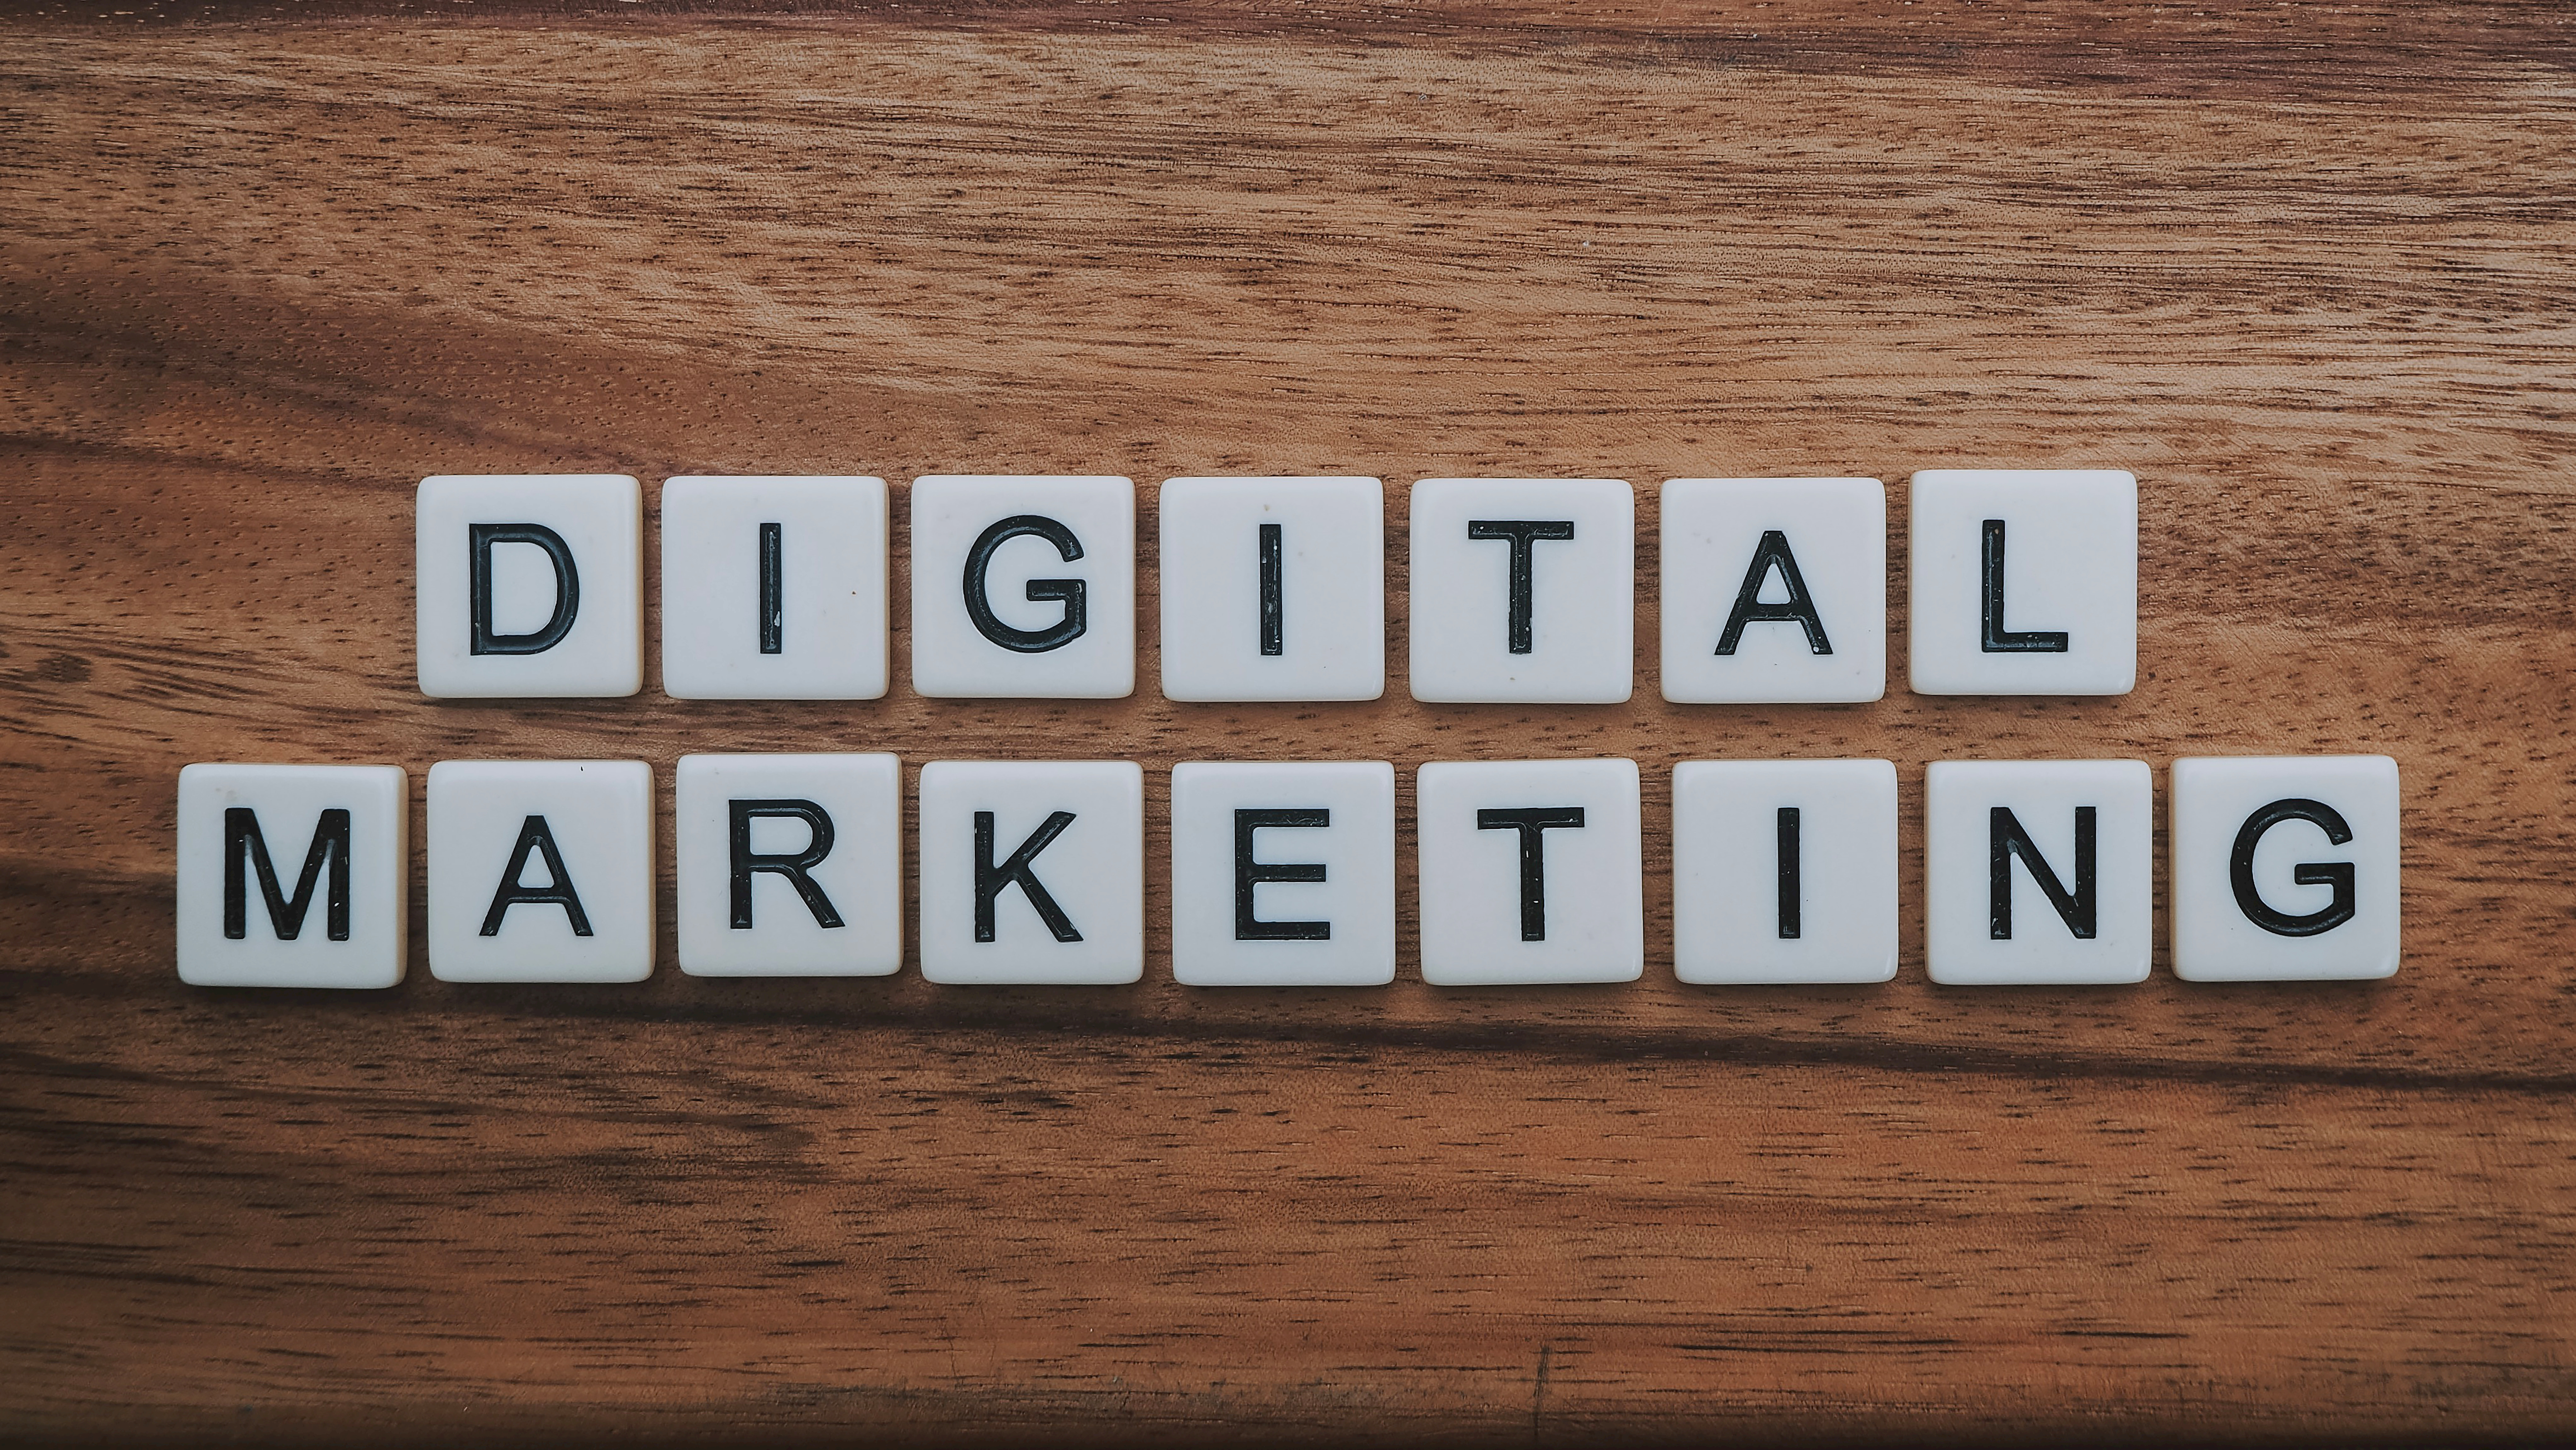 15 Essential Digital Marketing Tools For An Internet Marketer